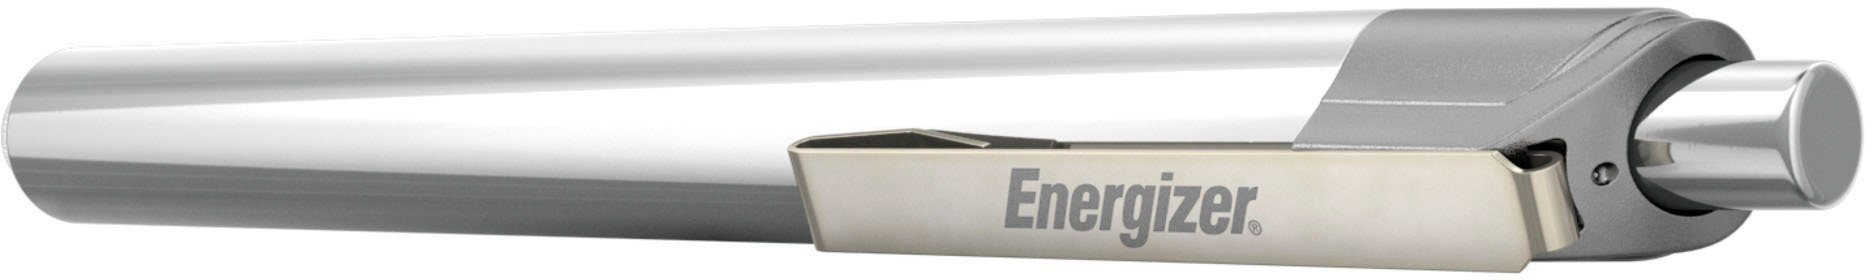 Energizer LED Taschenlampe Penlight